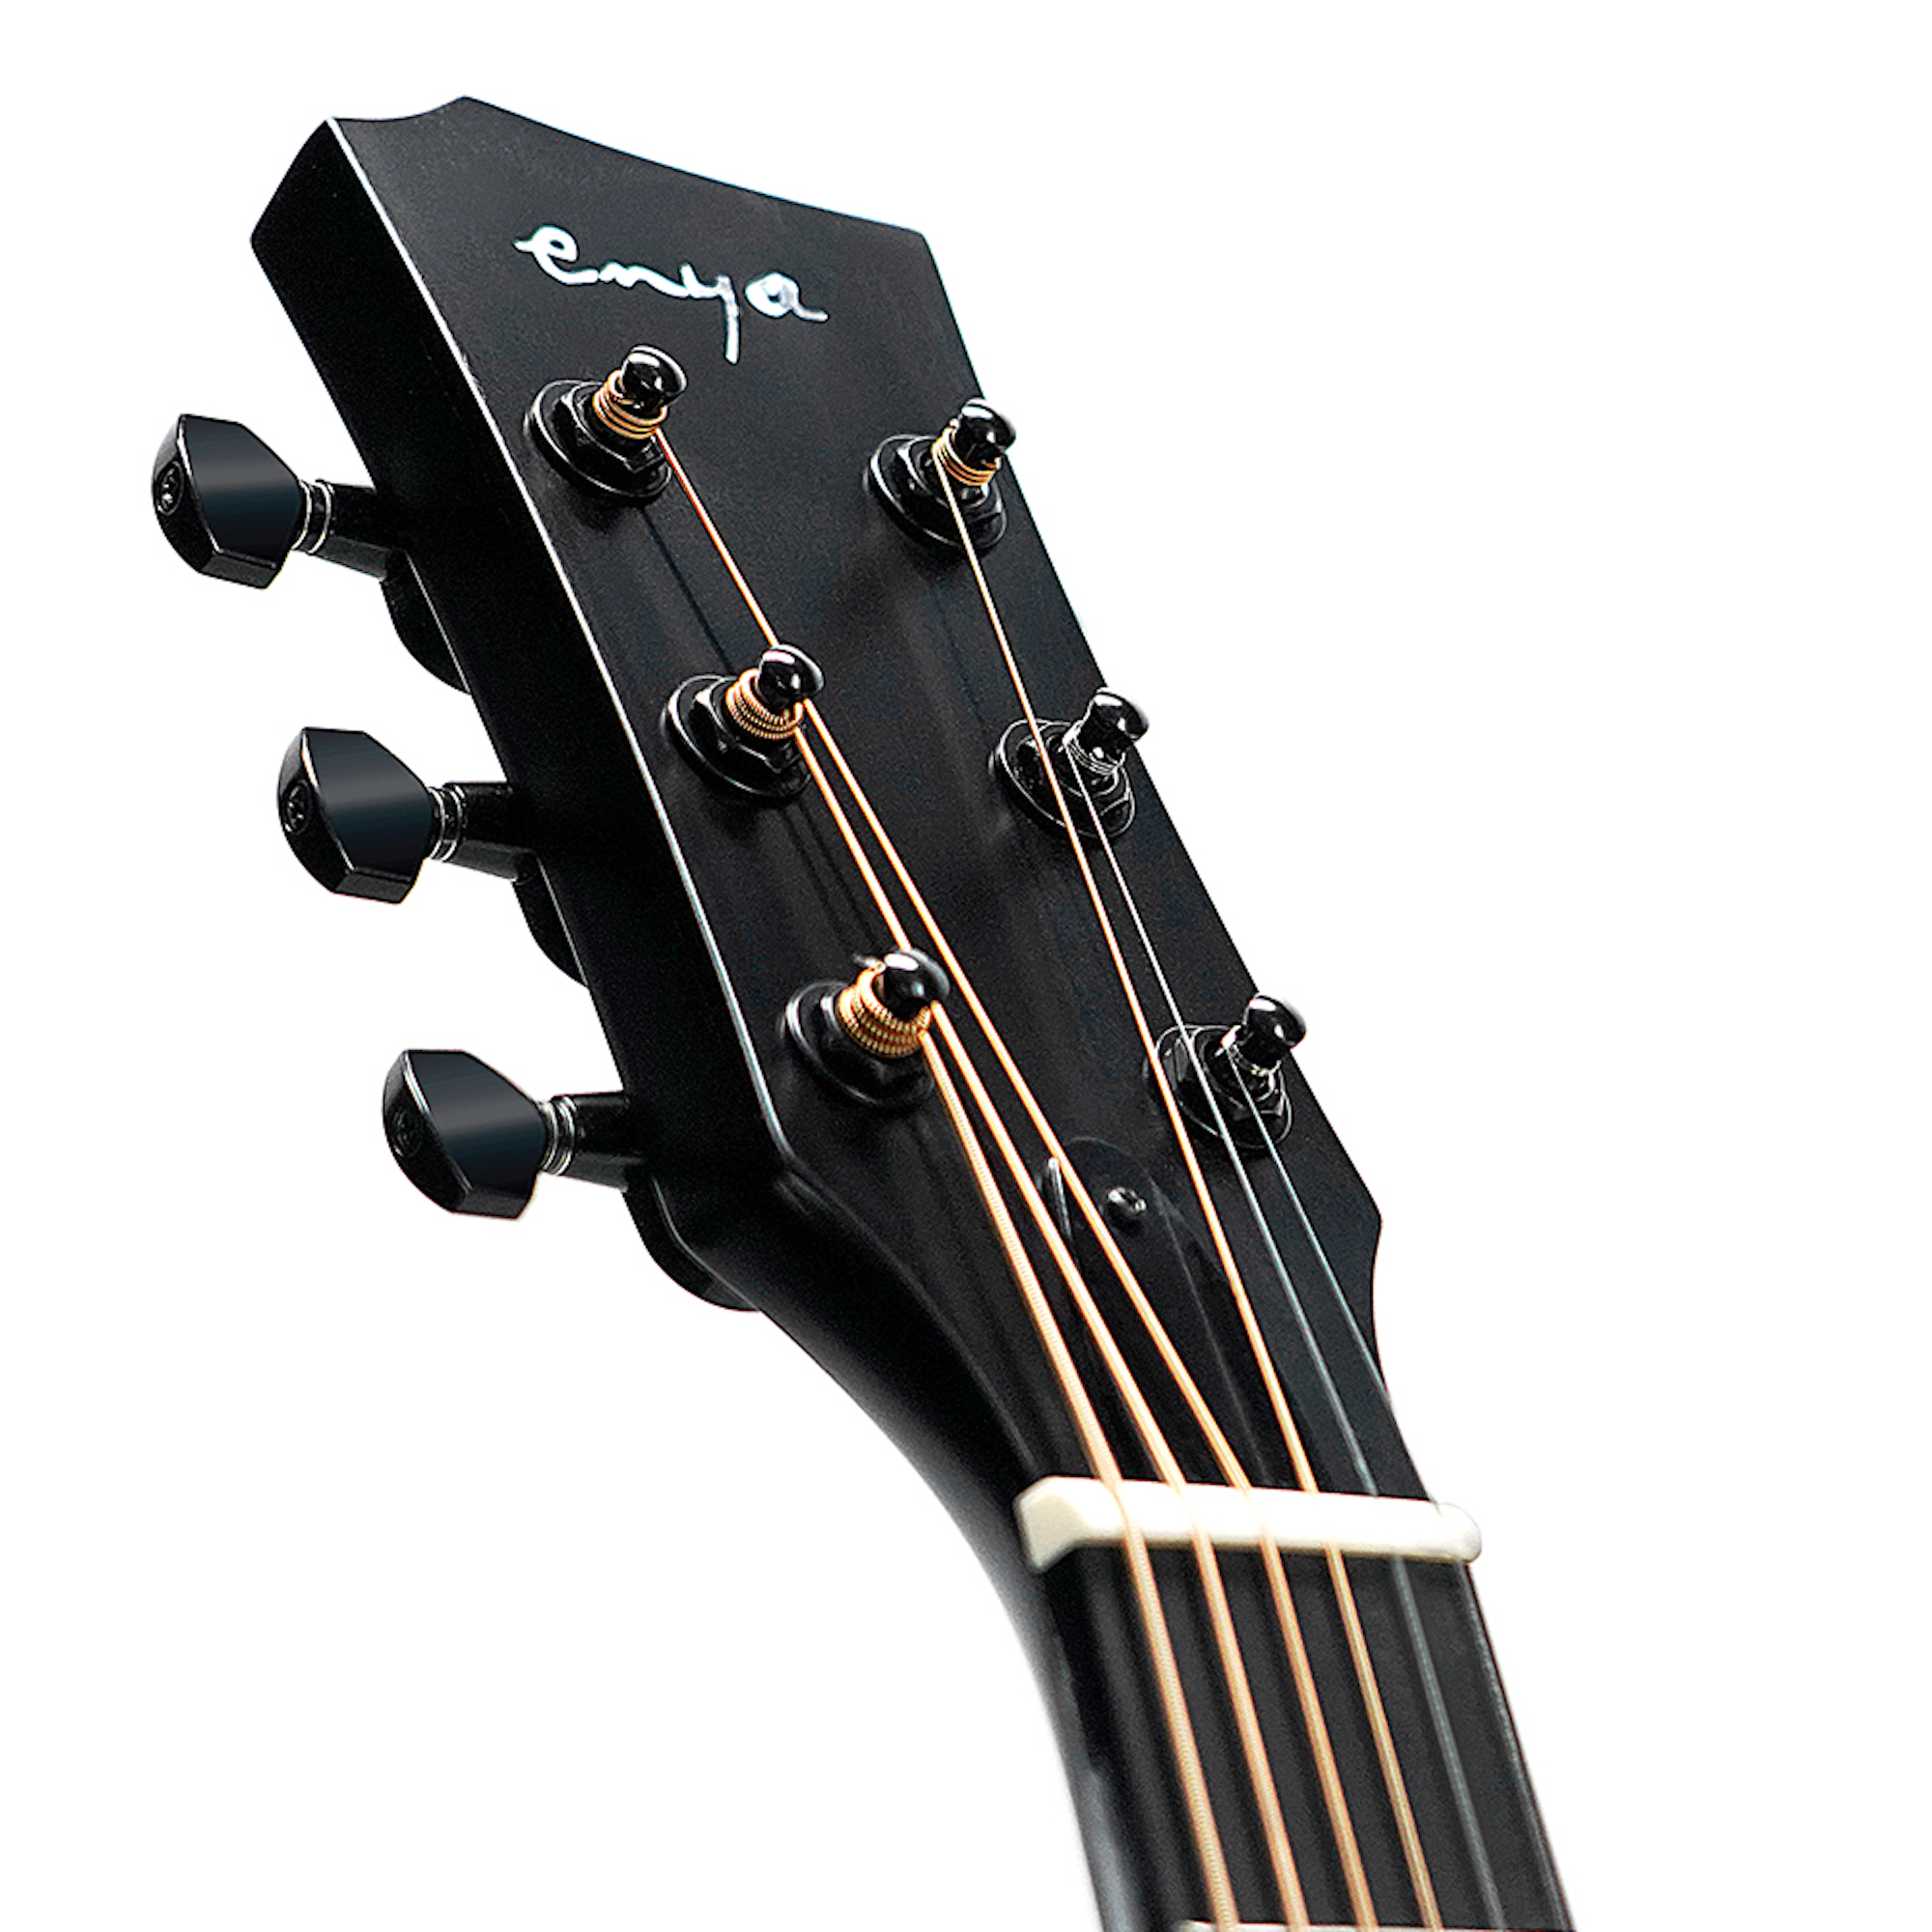 Enya Nova TransAcoustic Guitar online price in india